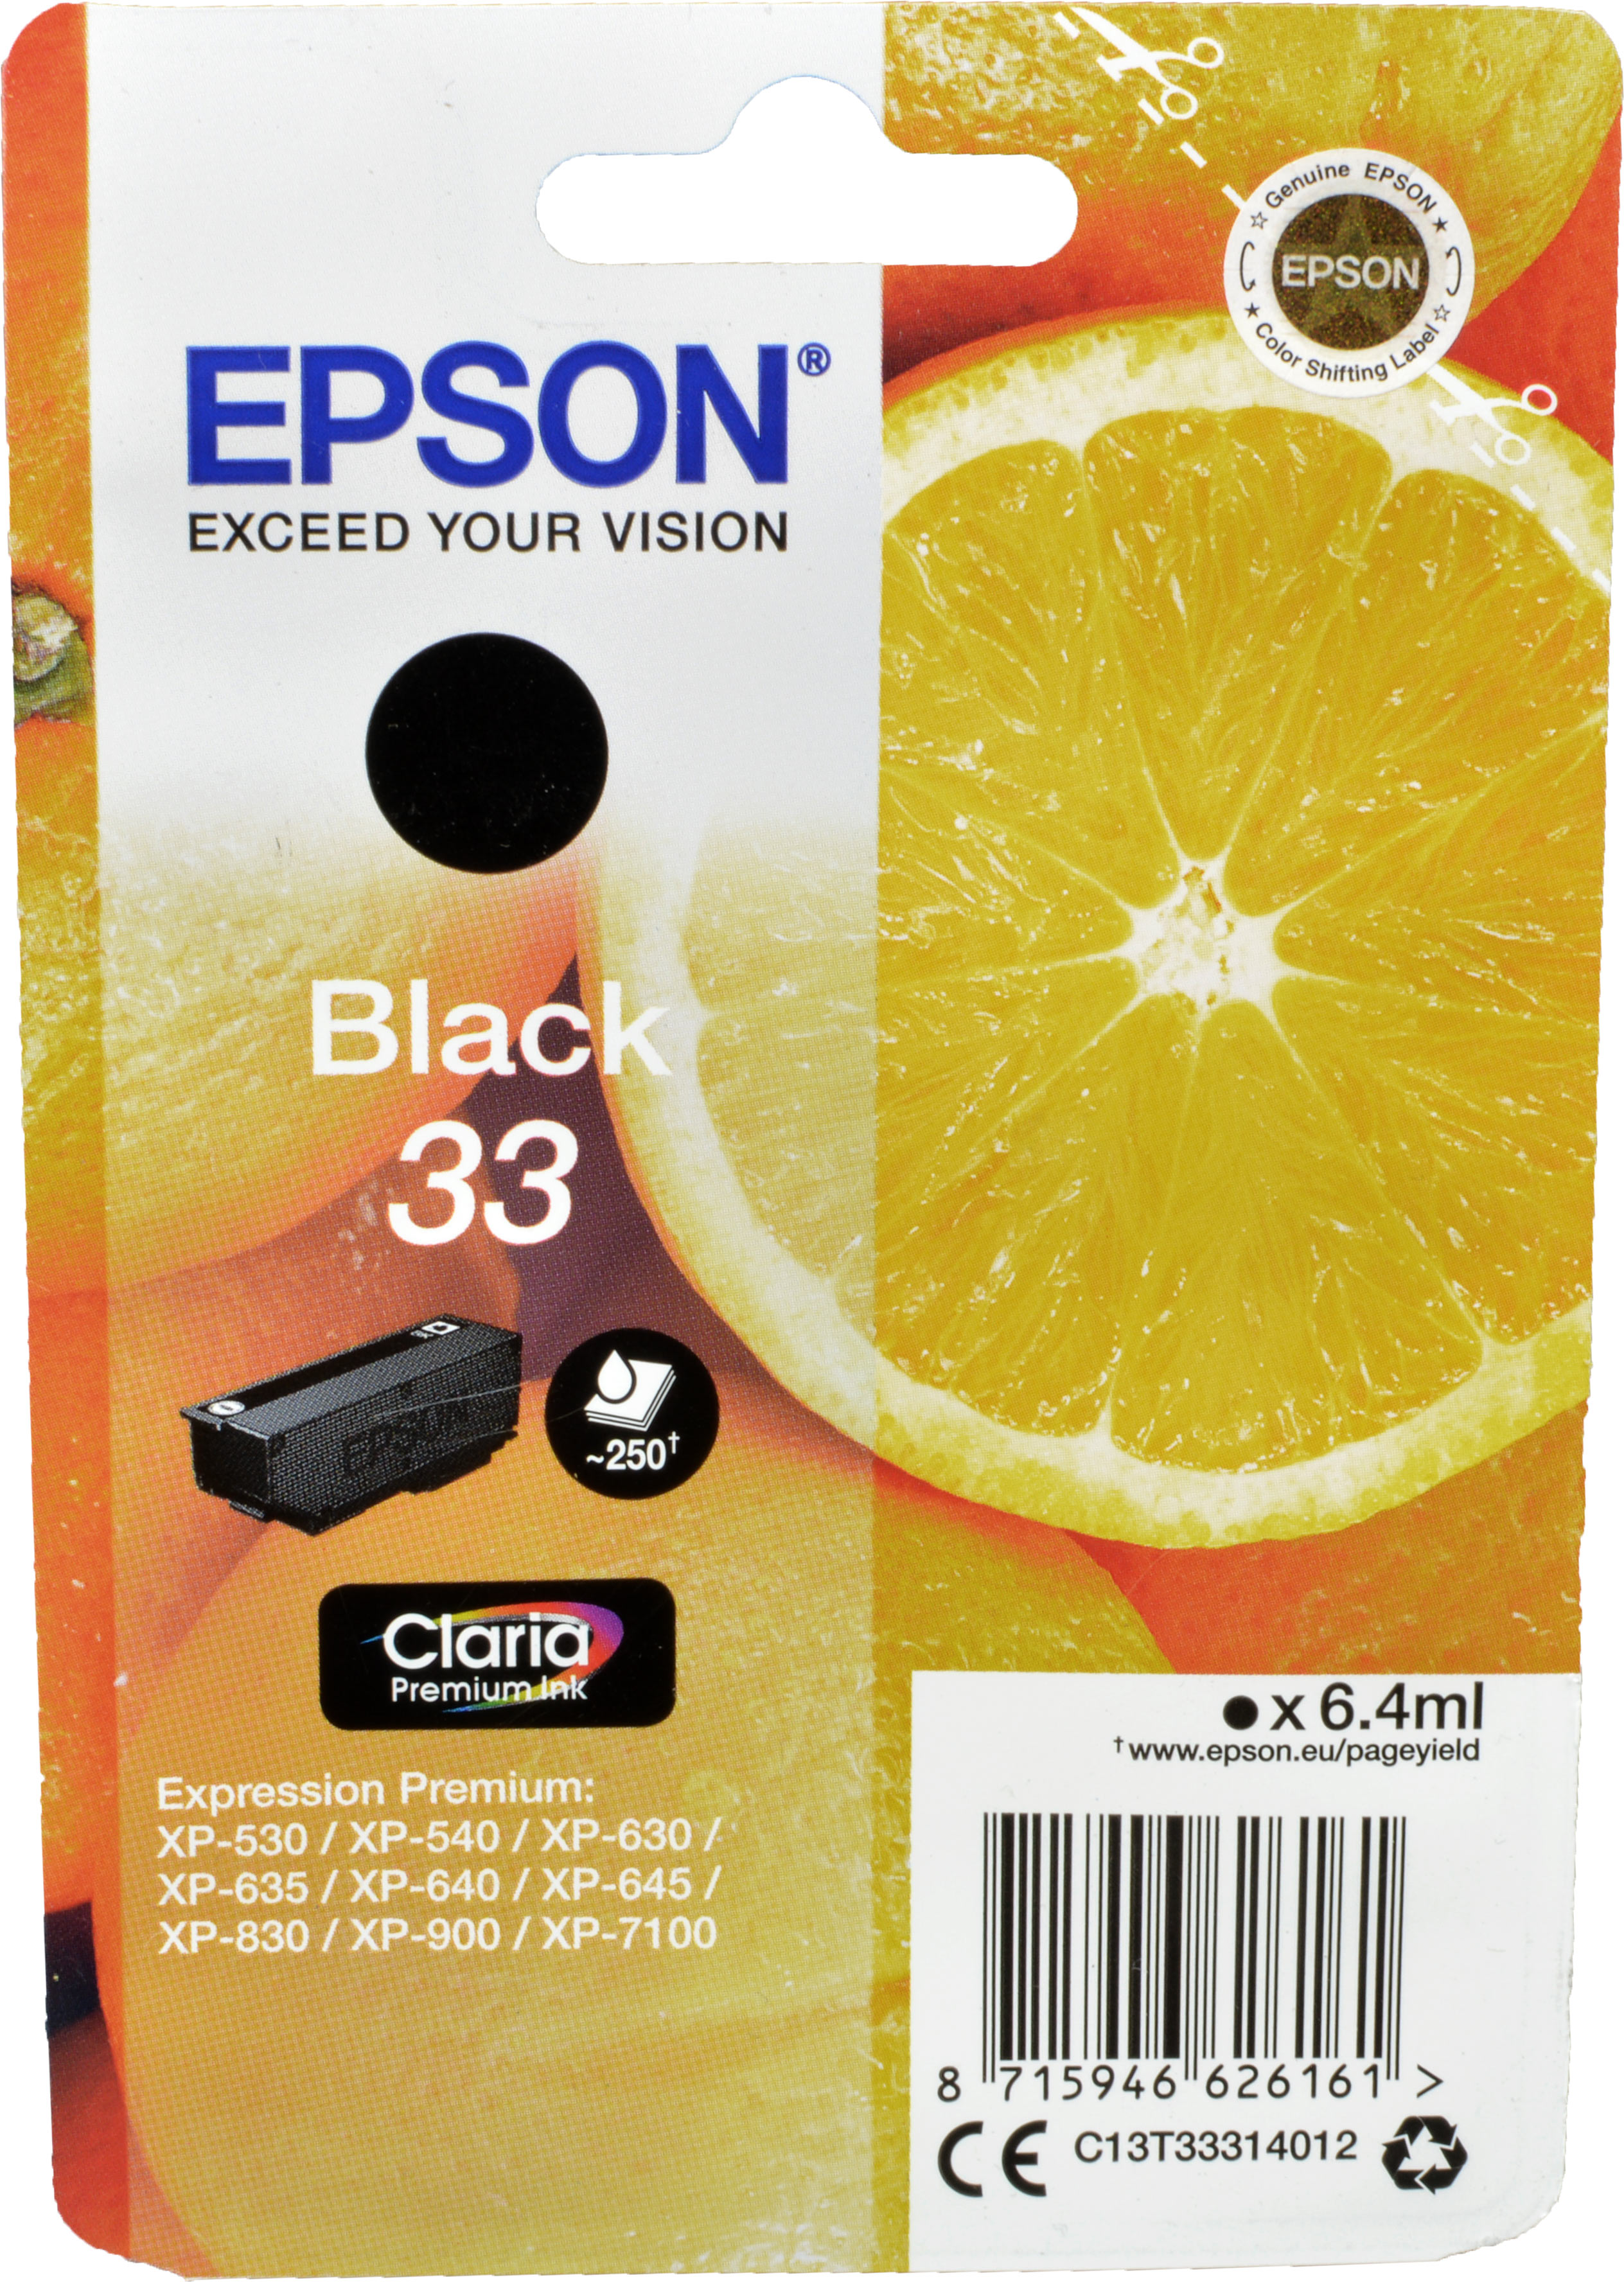 Epson Tinte C13T33314012 Black 33  schwarz